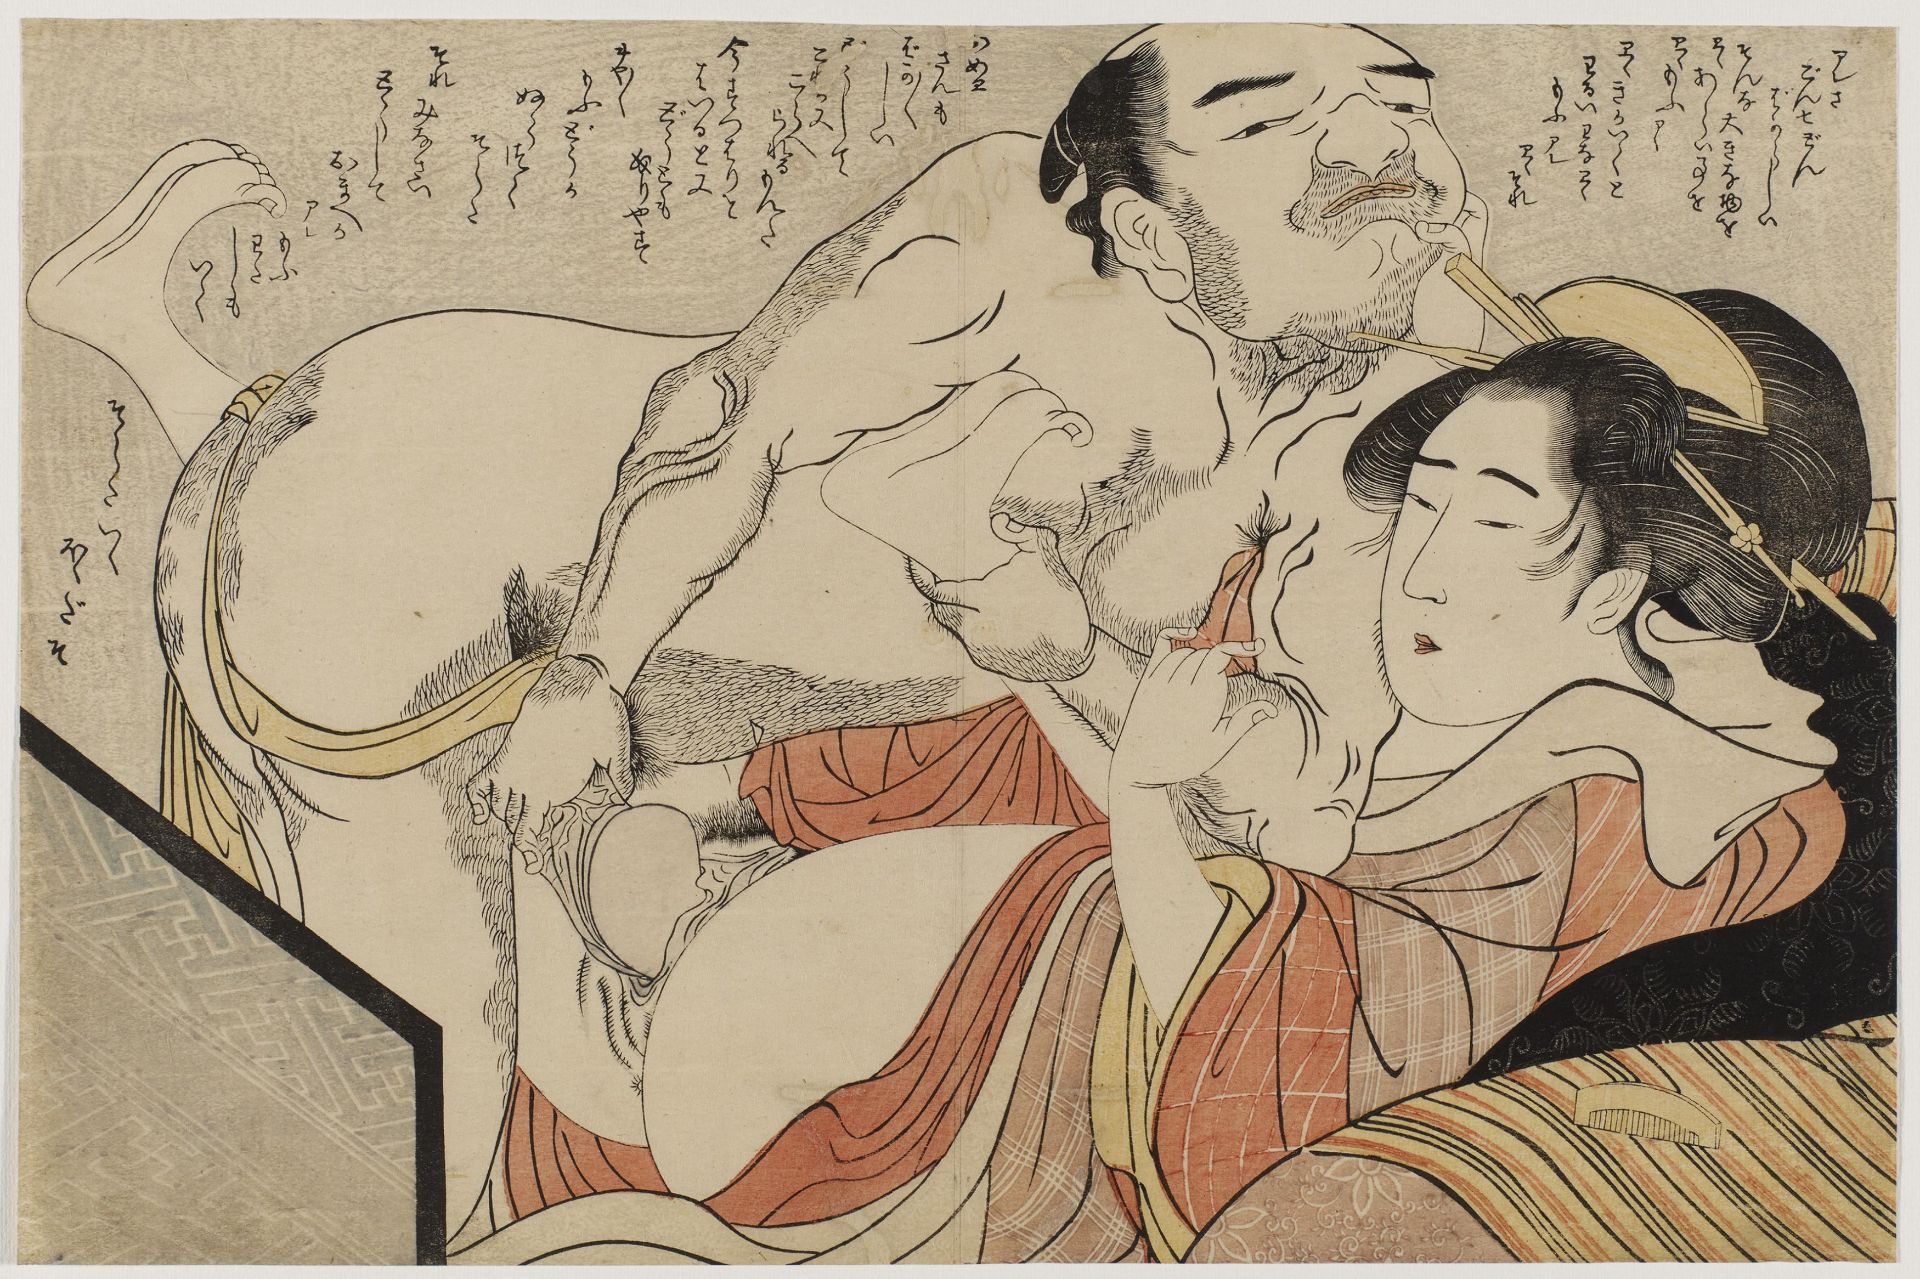 13 Blätter der Shunga-Serie "Fumi no kiyogaki" - Image 26 of 27